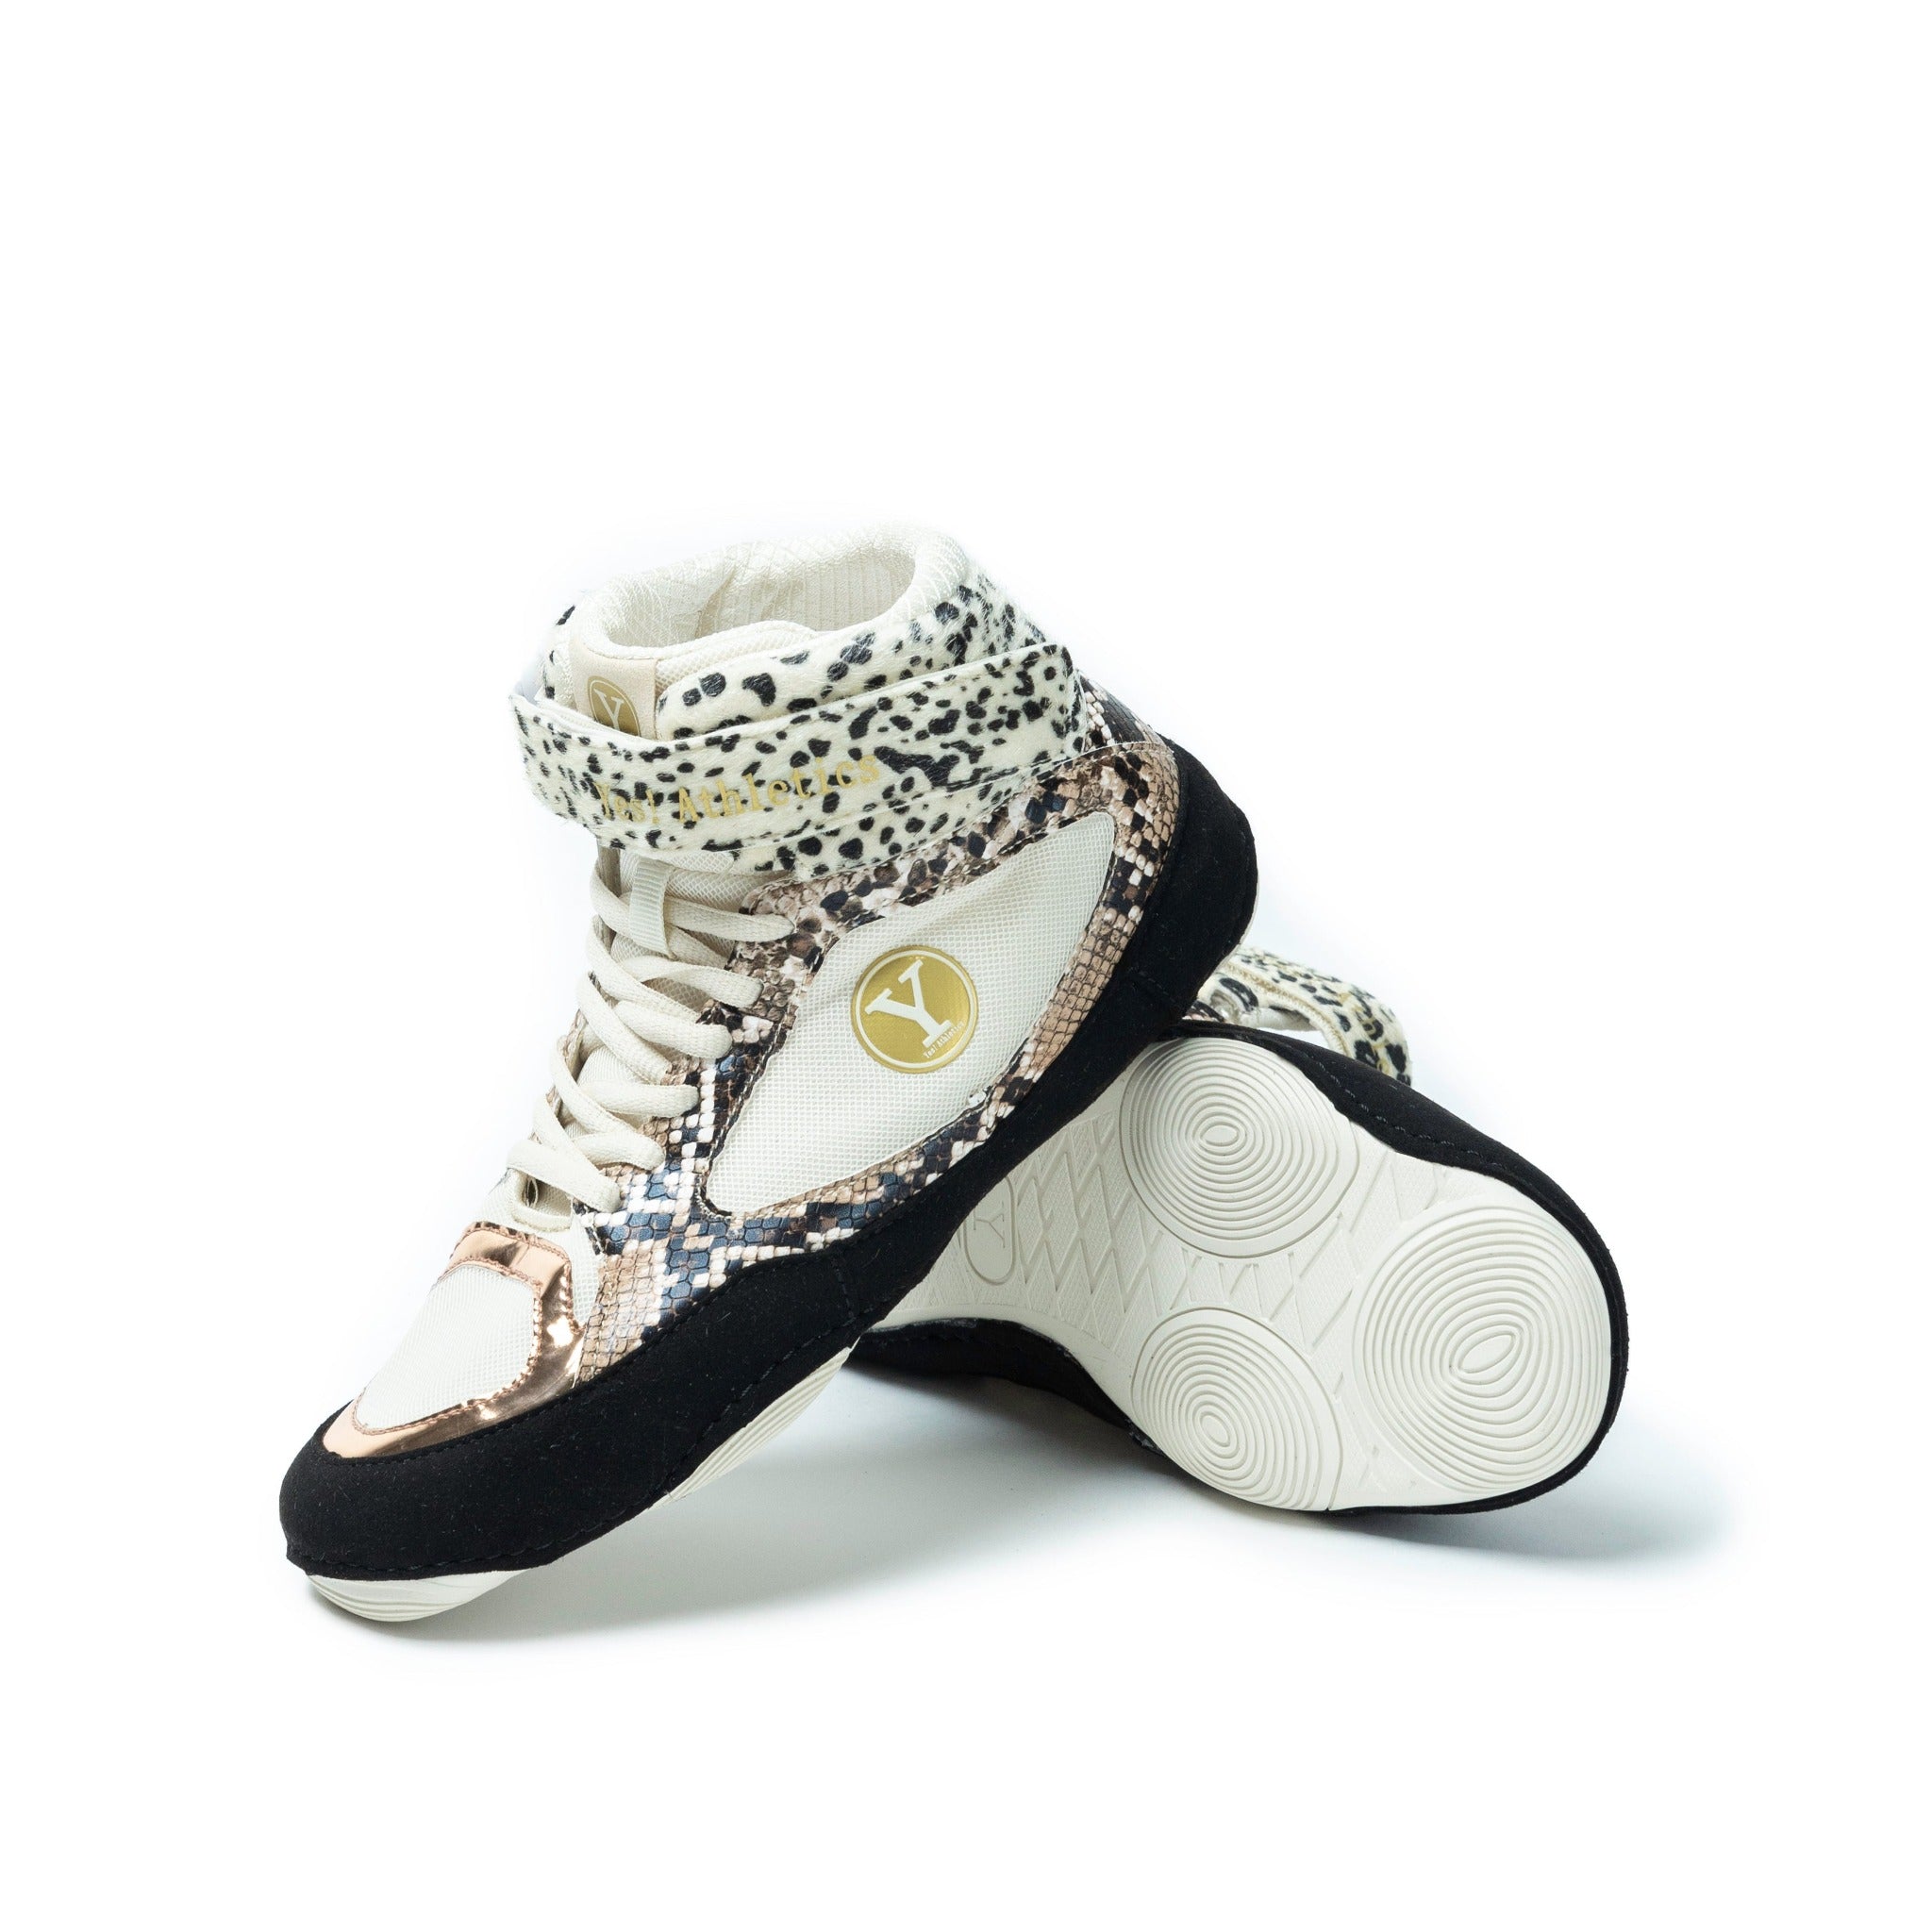 Cheetah/Snake print wrestling shoe